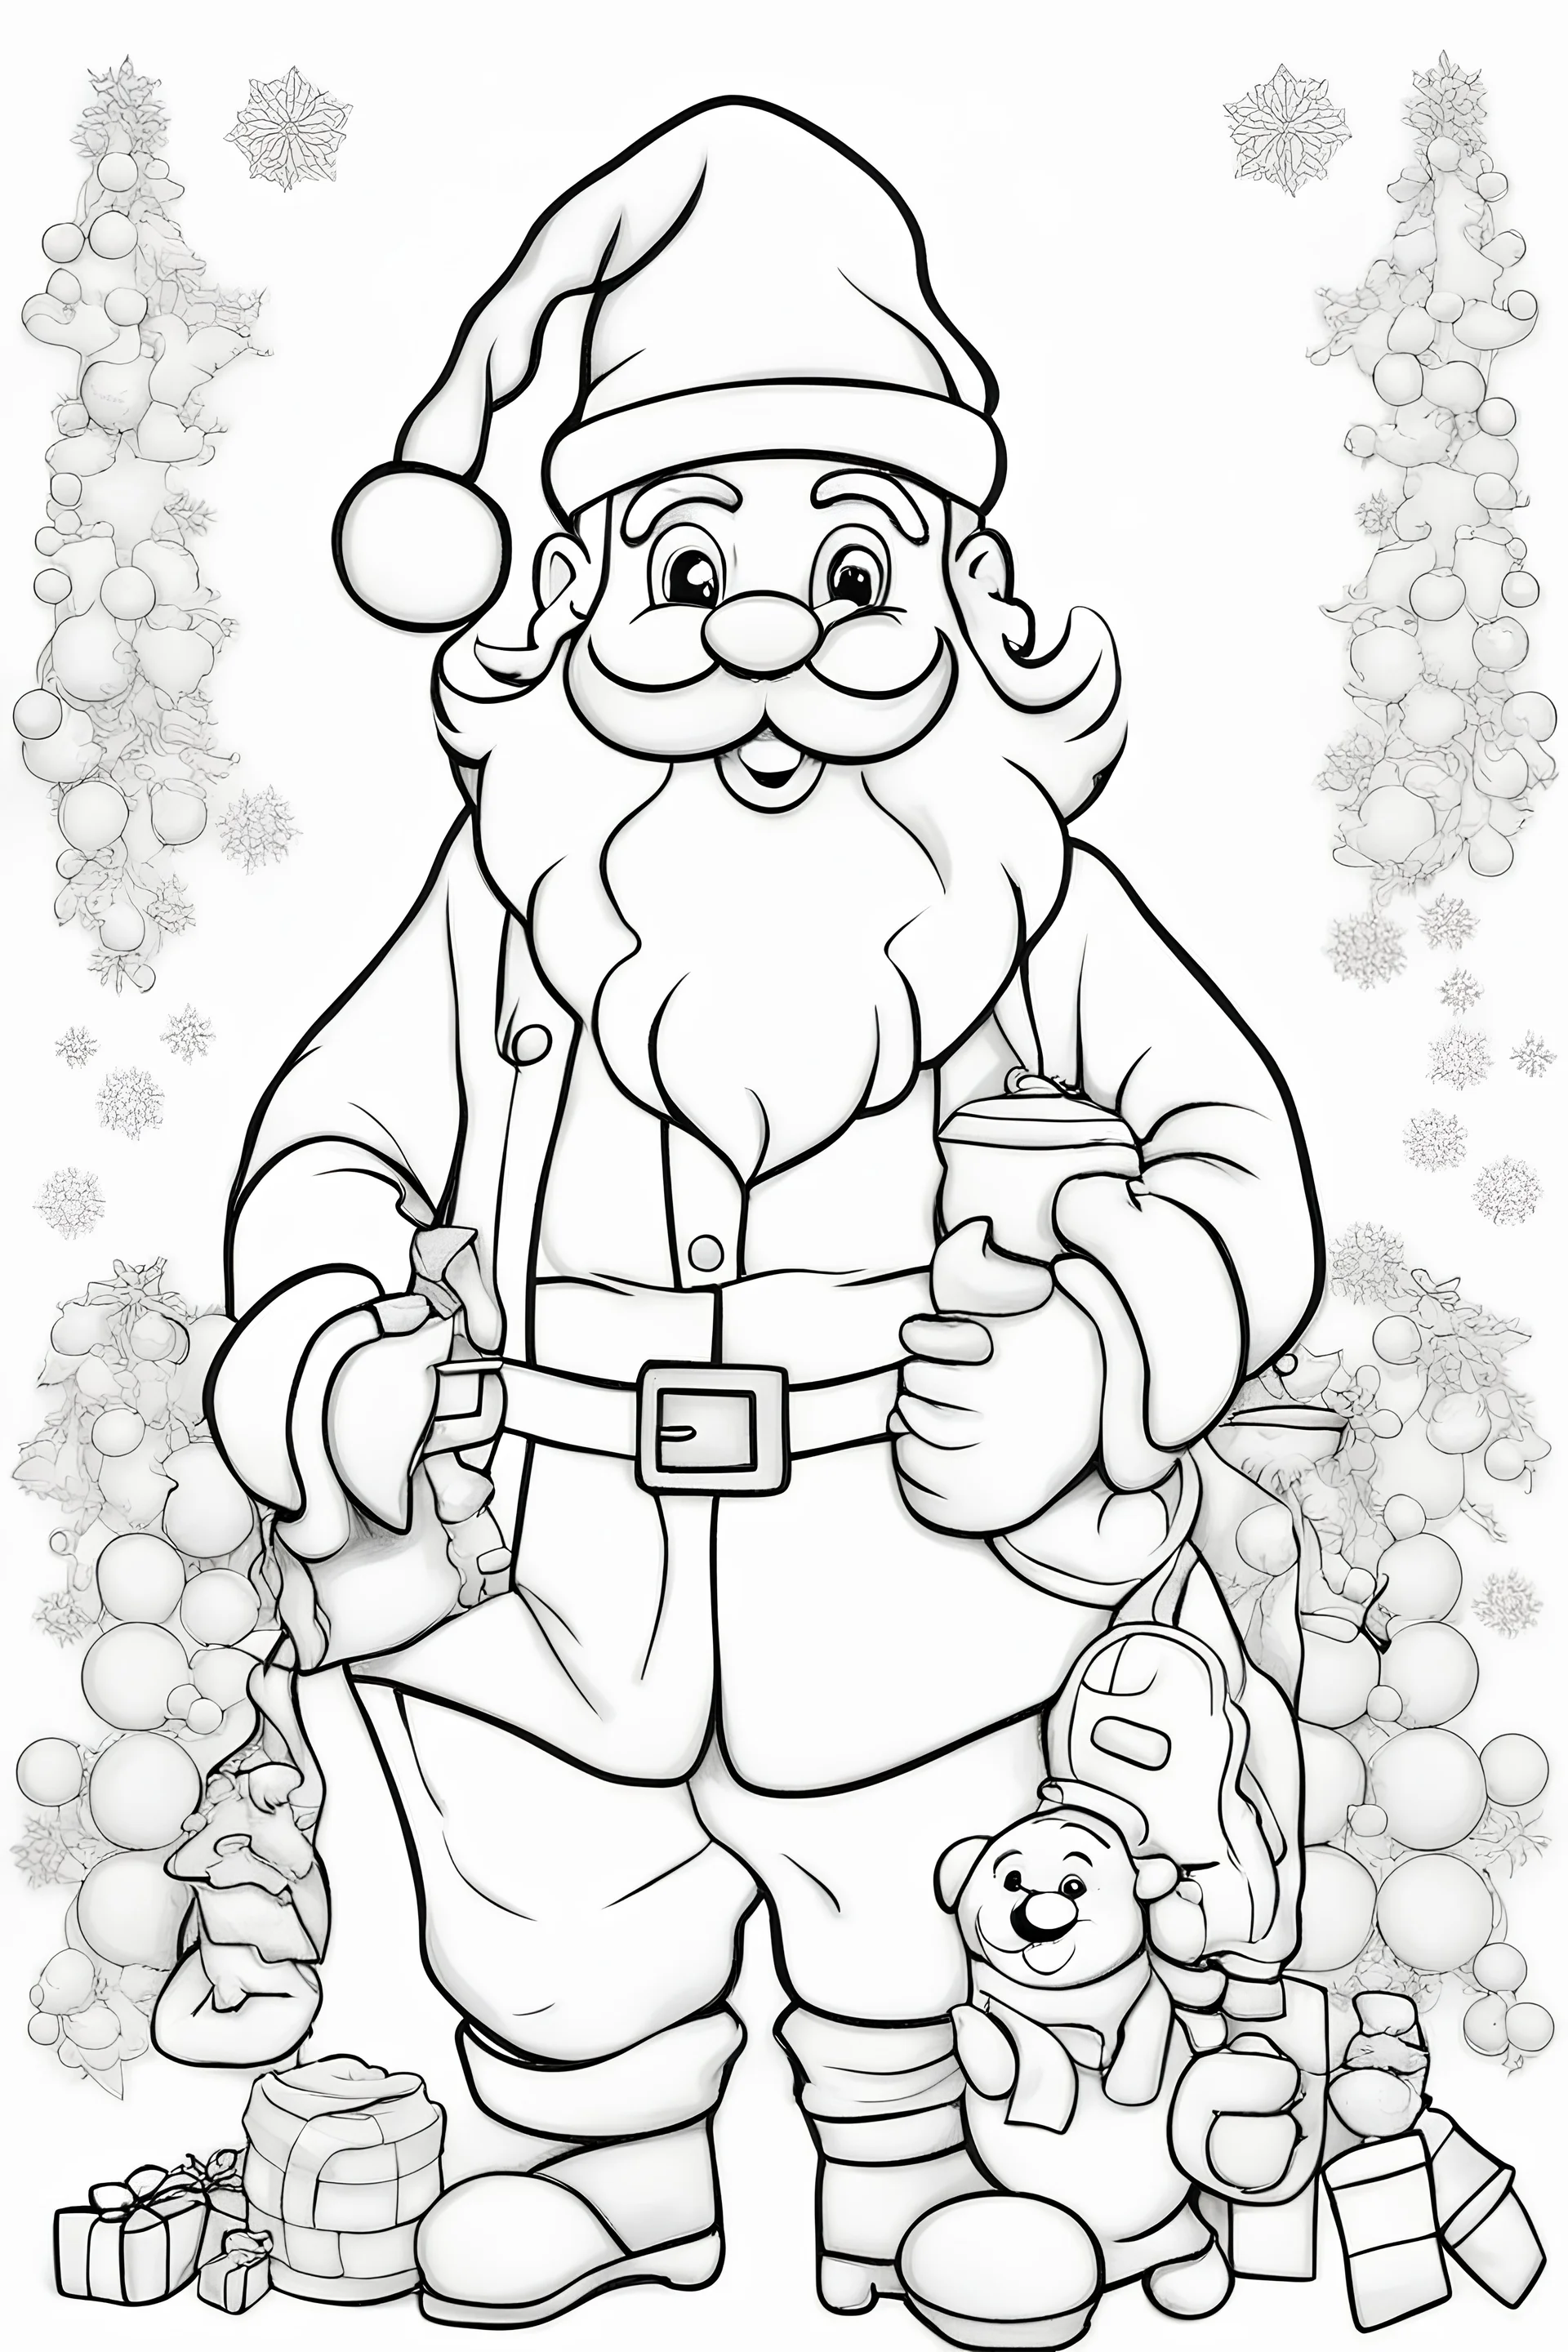 Santa Claus, black and white | Decorative Illustrations ~ Creative Market